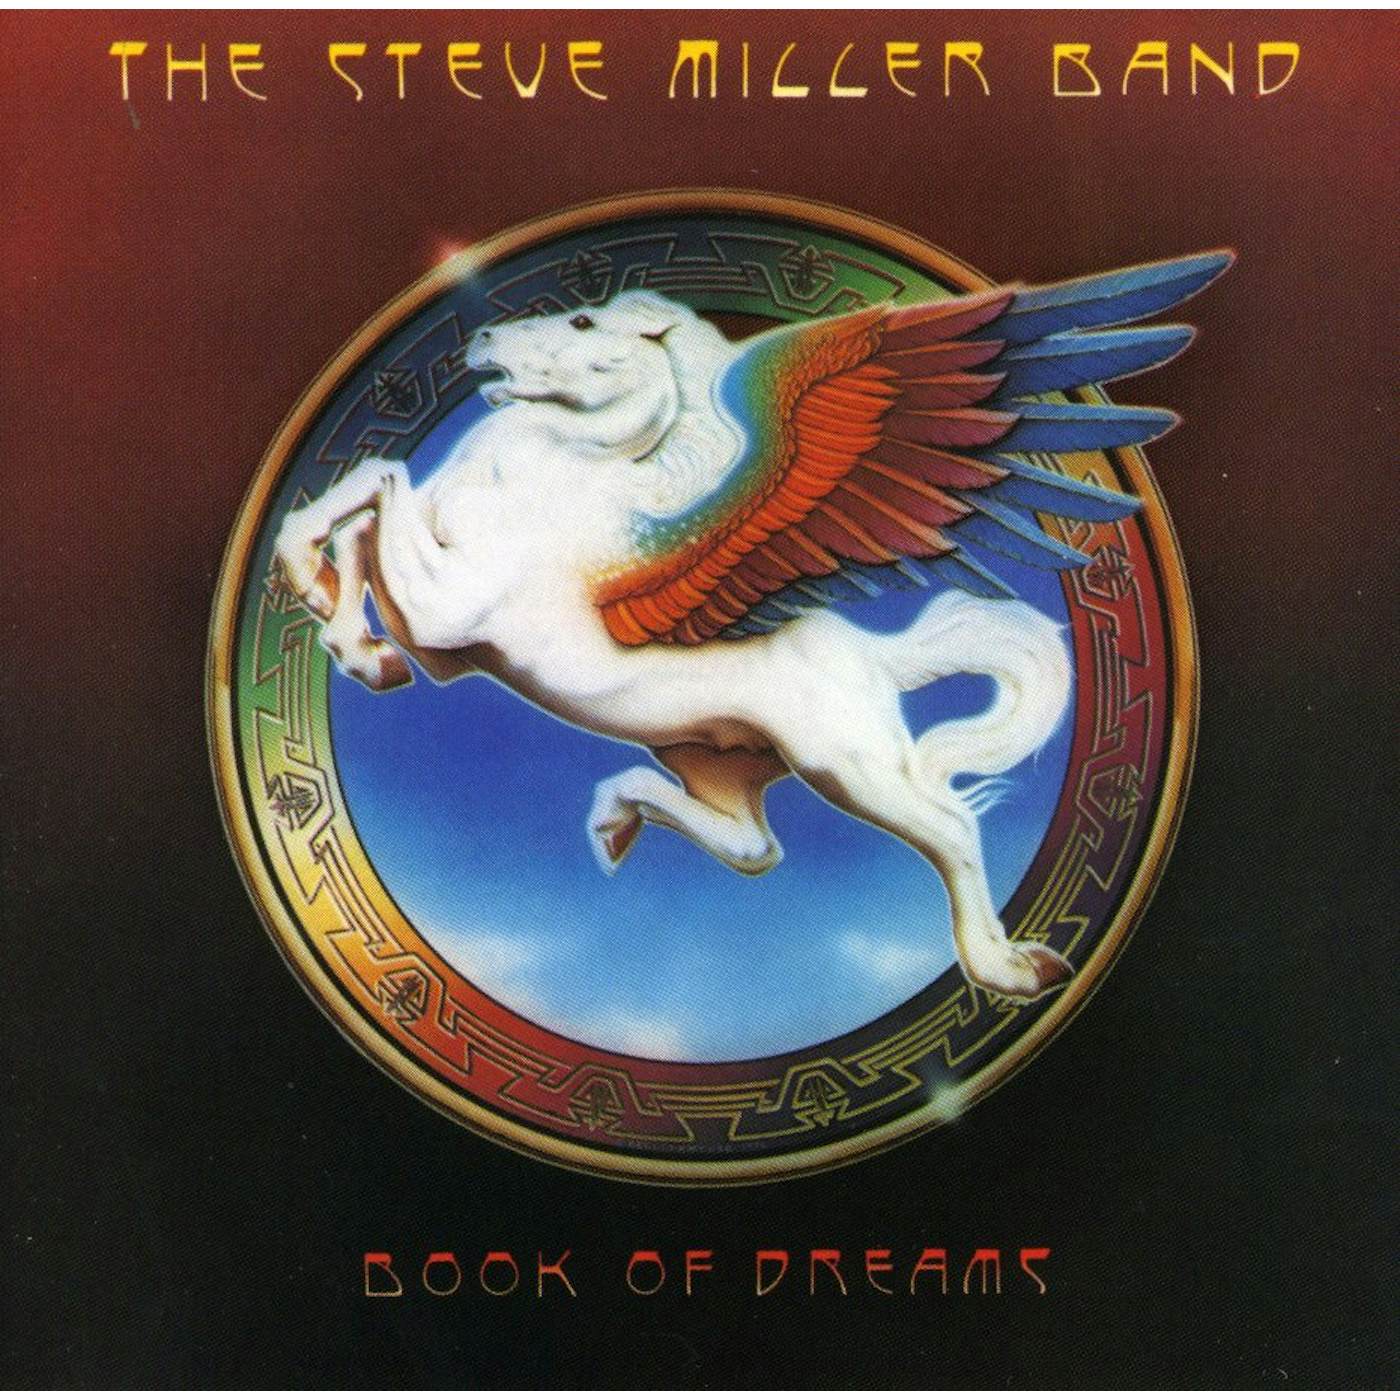 Steve Miller Band BOOK OF DREAMS CD